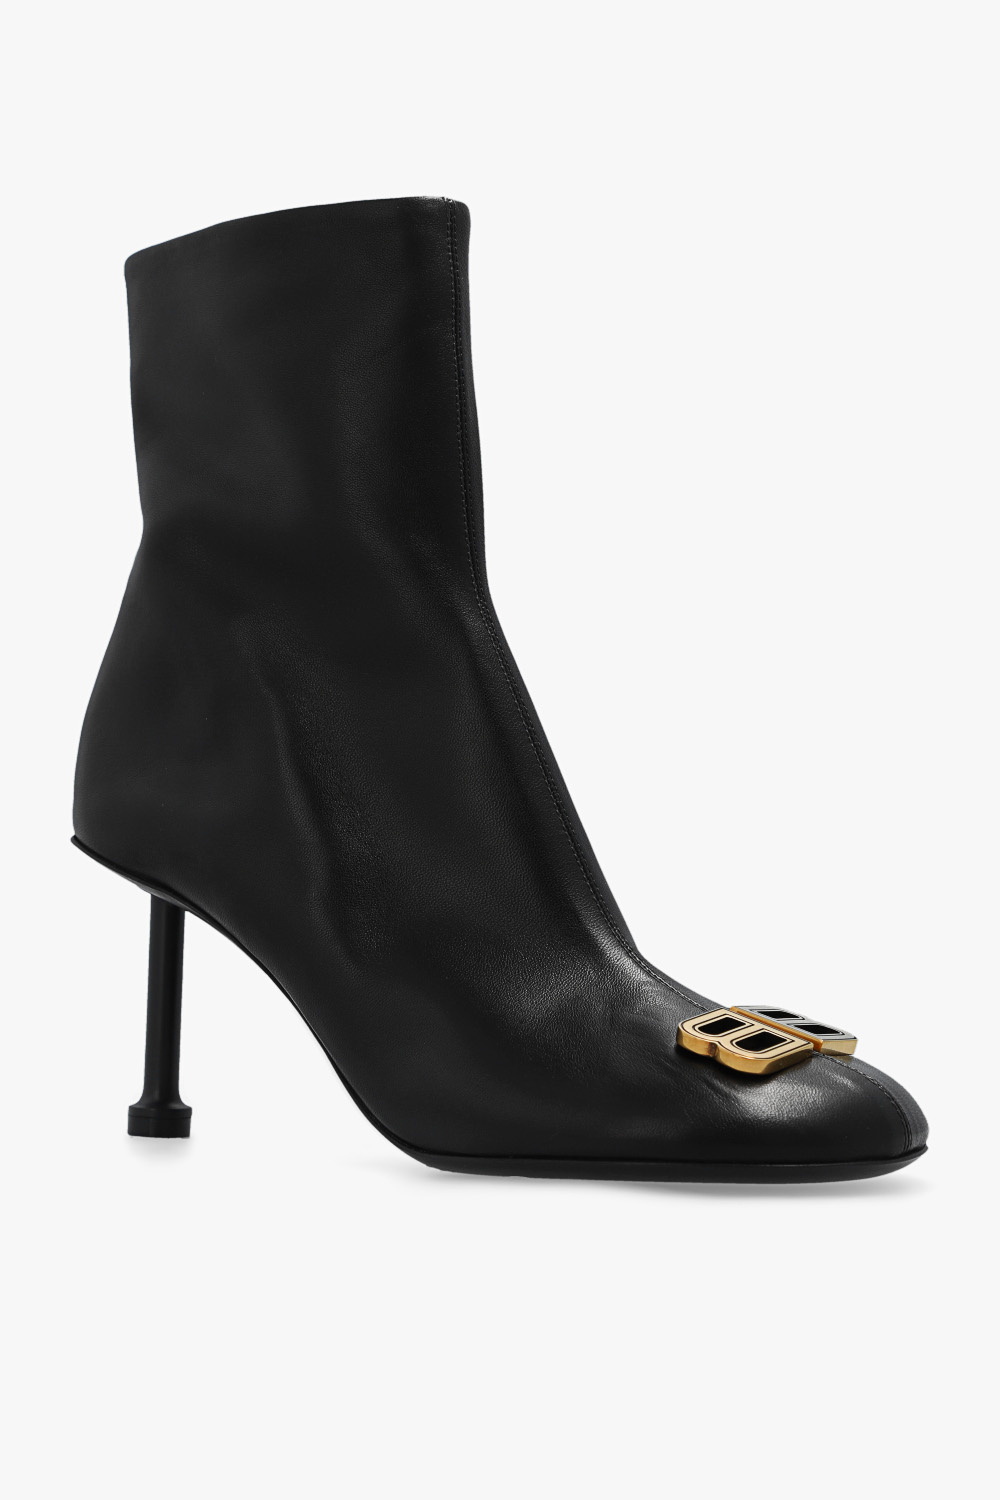 Balenciaga ‘Groupie’ heeled AU2 boots